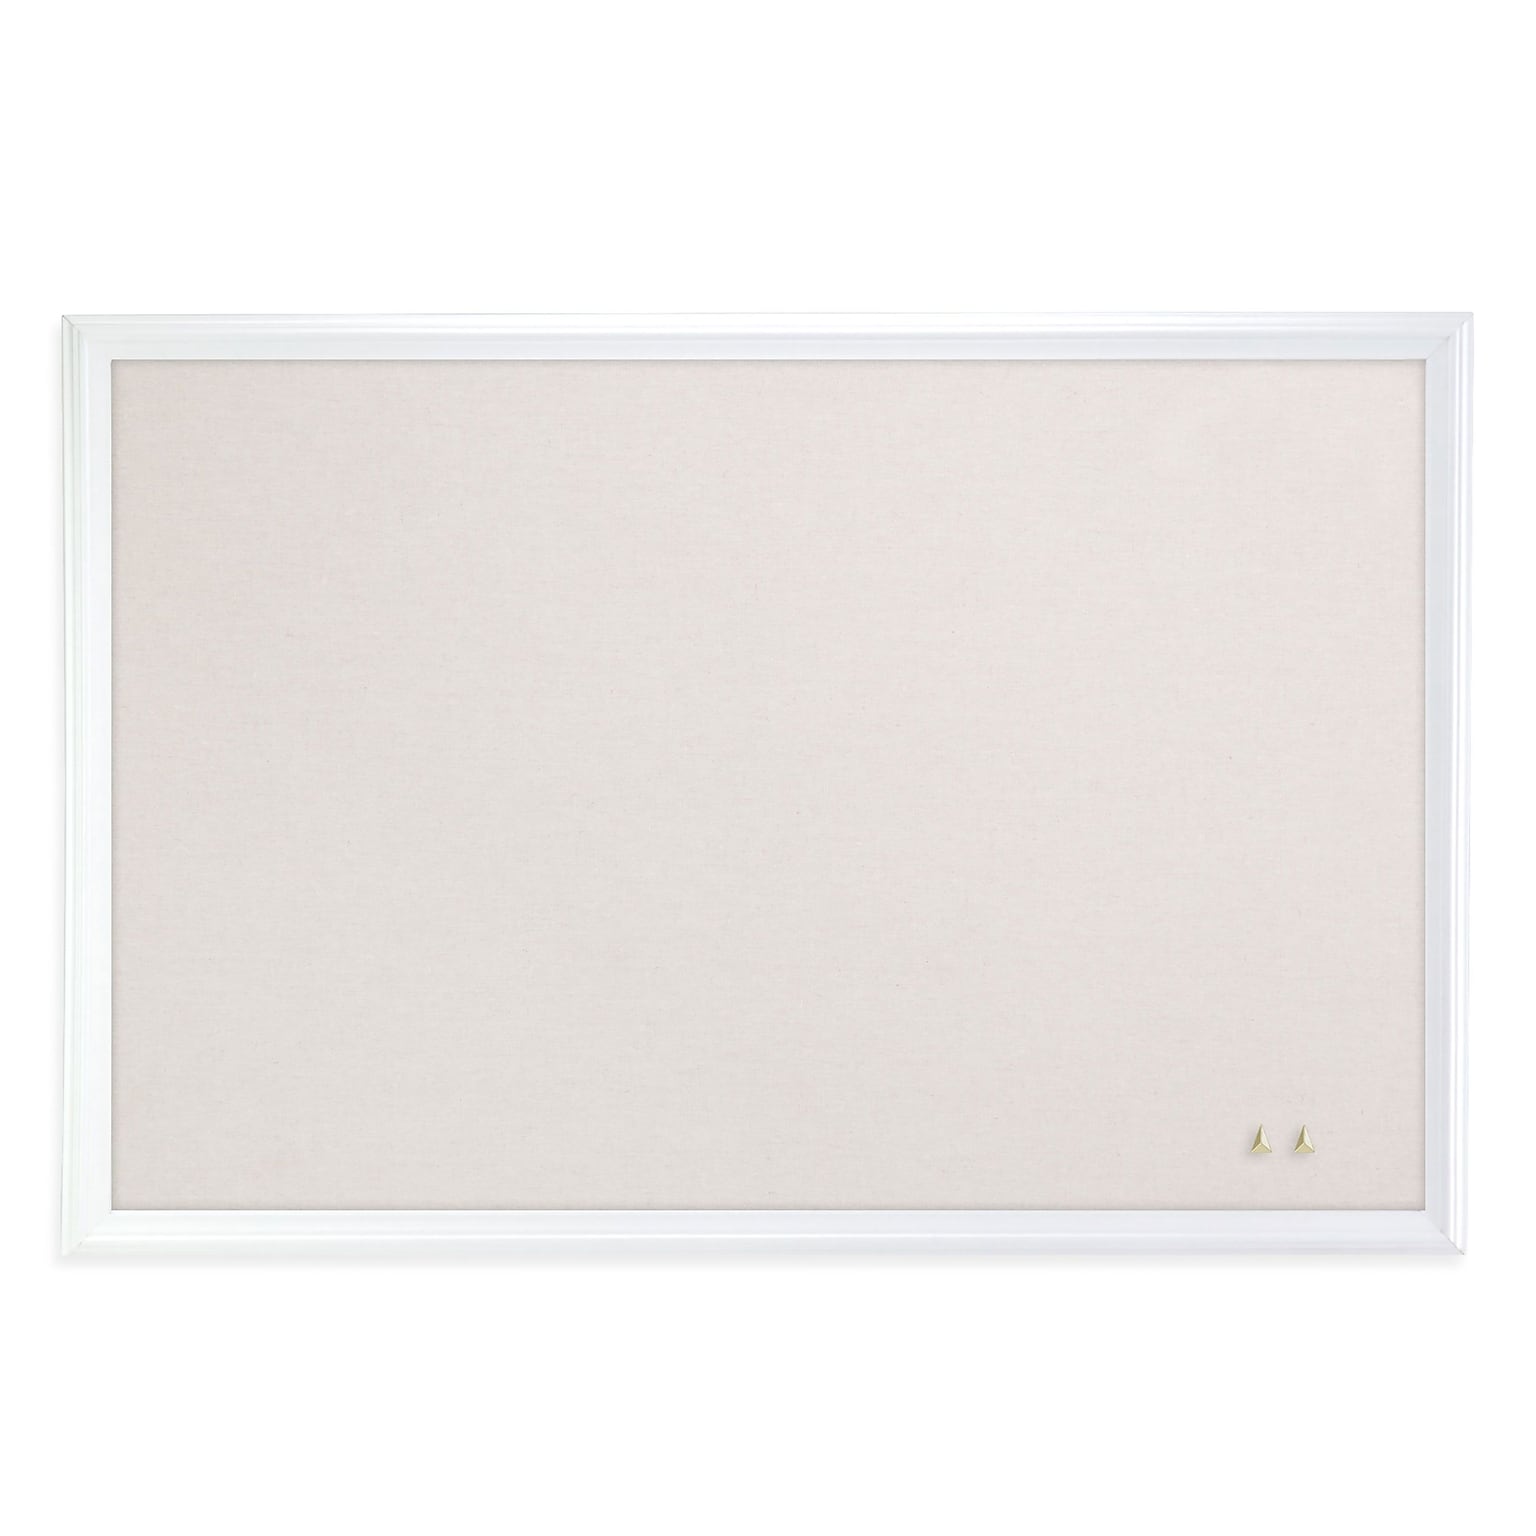 U Brands Cork Linen Bulletin Board, White Decor Frame, 30 x 20 (2074U00-01)